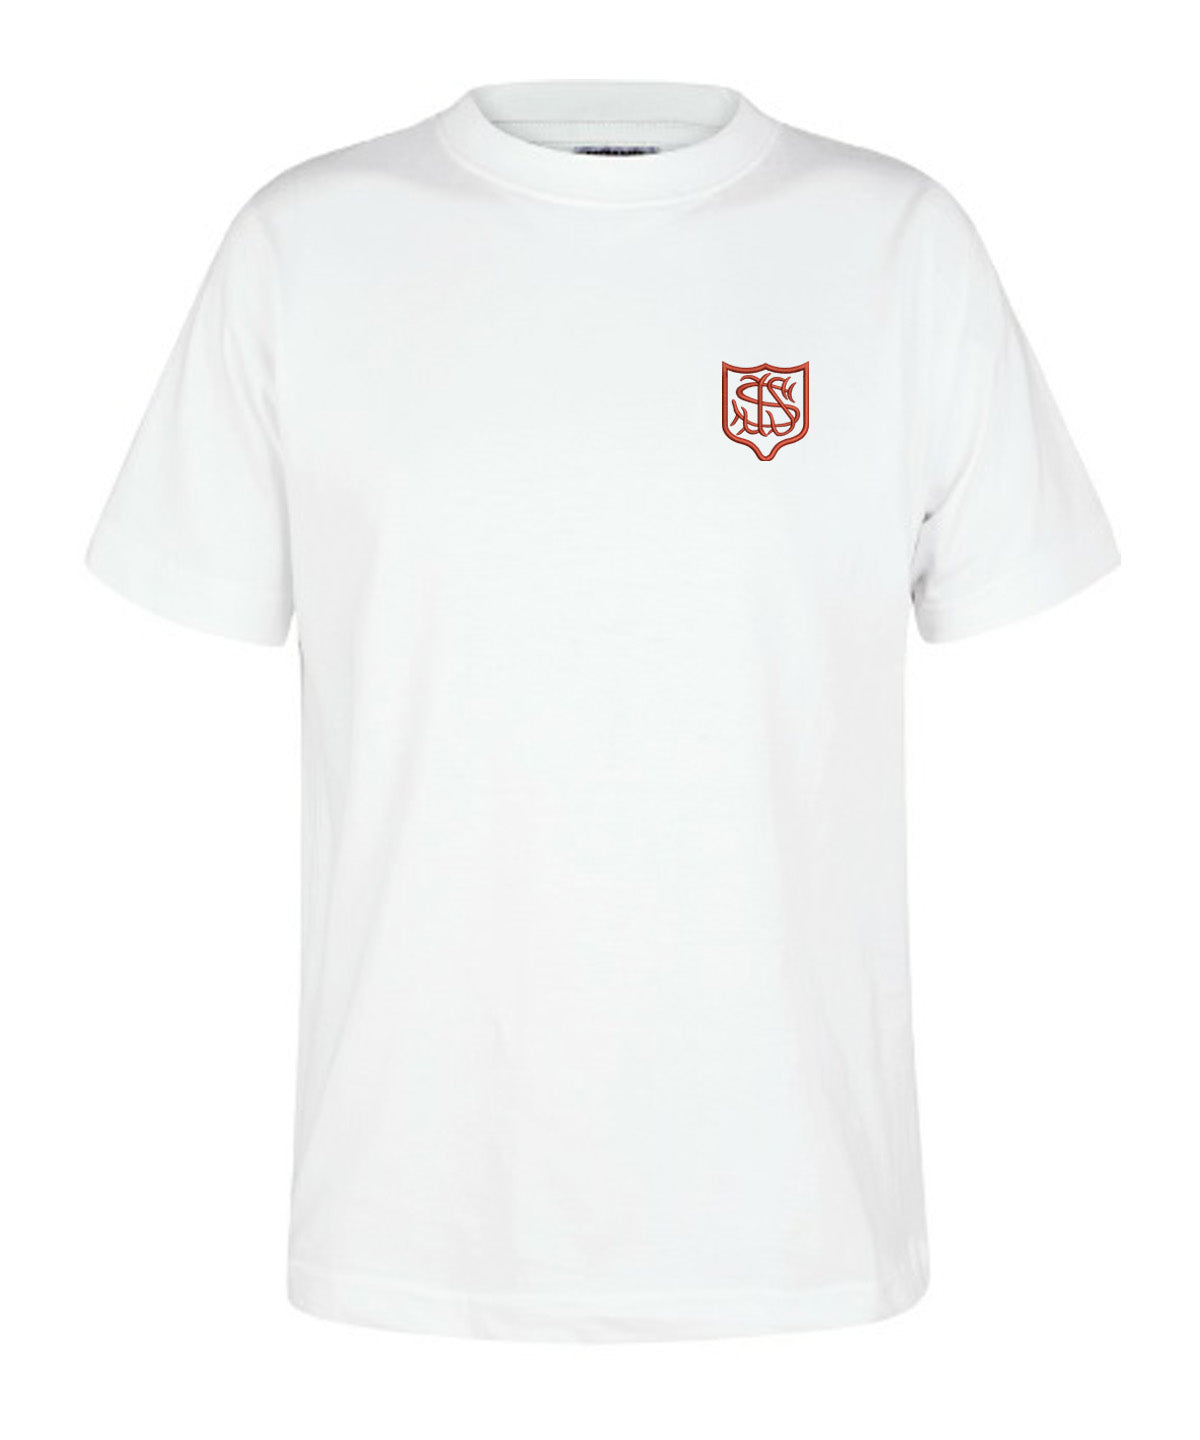 St Joseph's Primary School Linlithgow - Unisex Cotton T Shirt - White